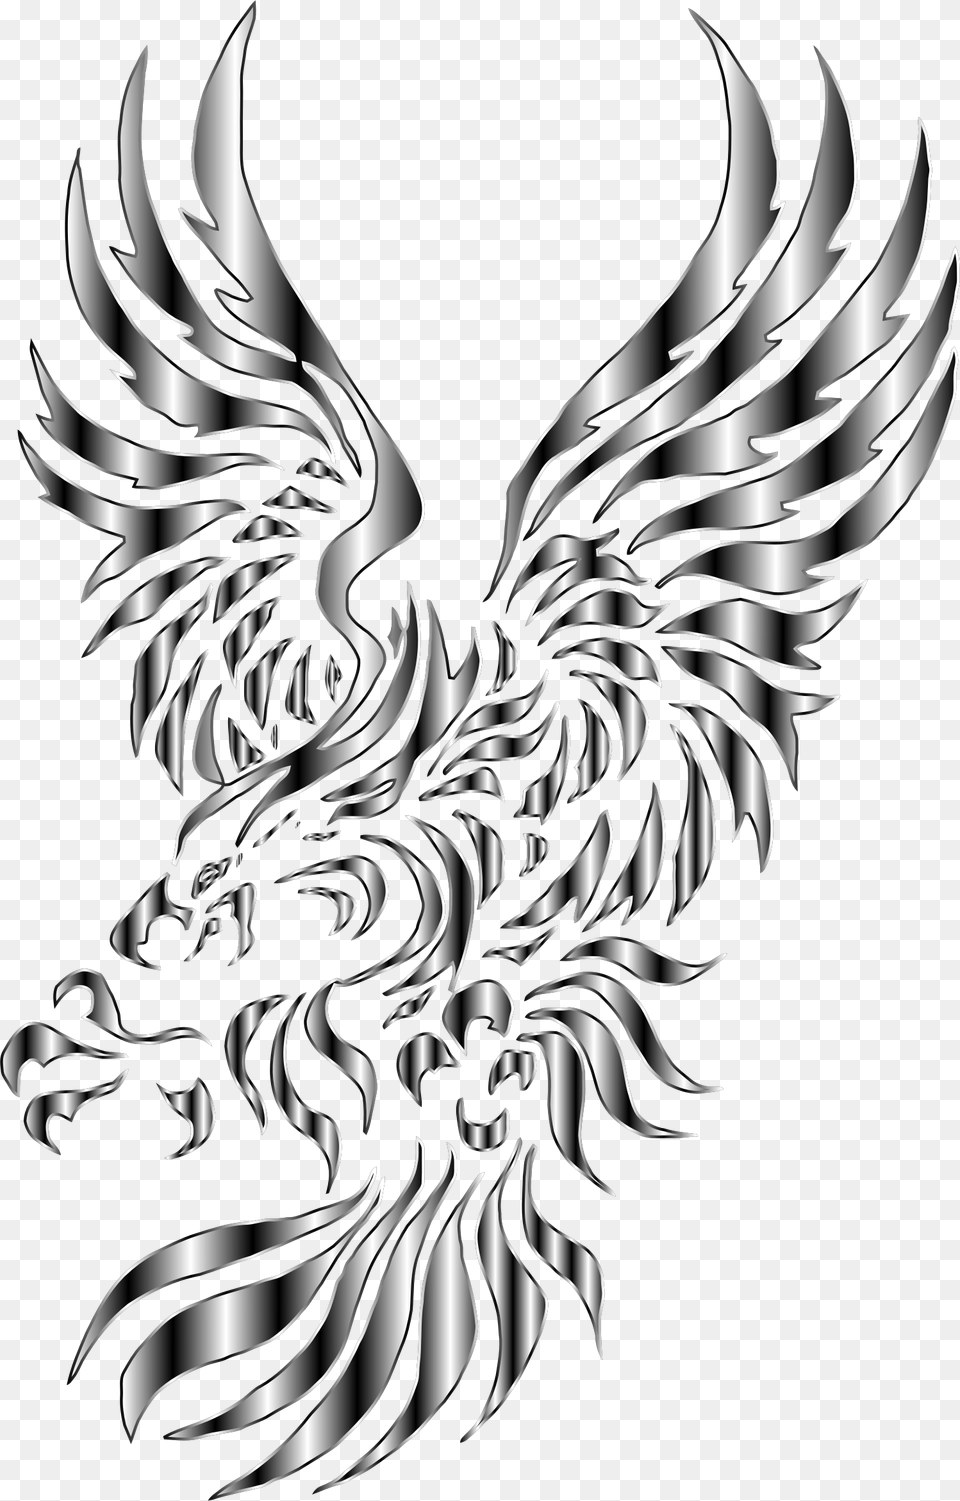 Chromatic Tribal Eagle 2 8 No Background Clip Arts Tribal Eagle Head Tattoo Designs, Emblem, Symbol Png